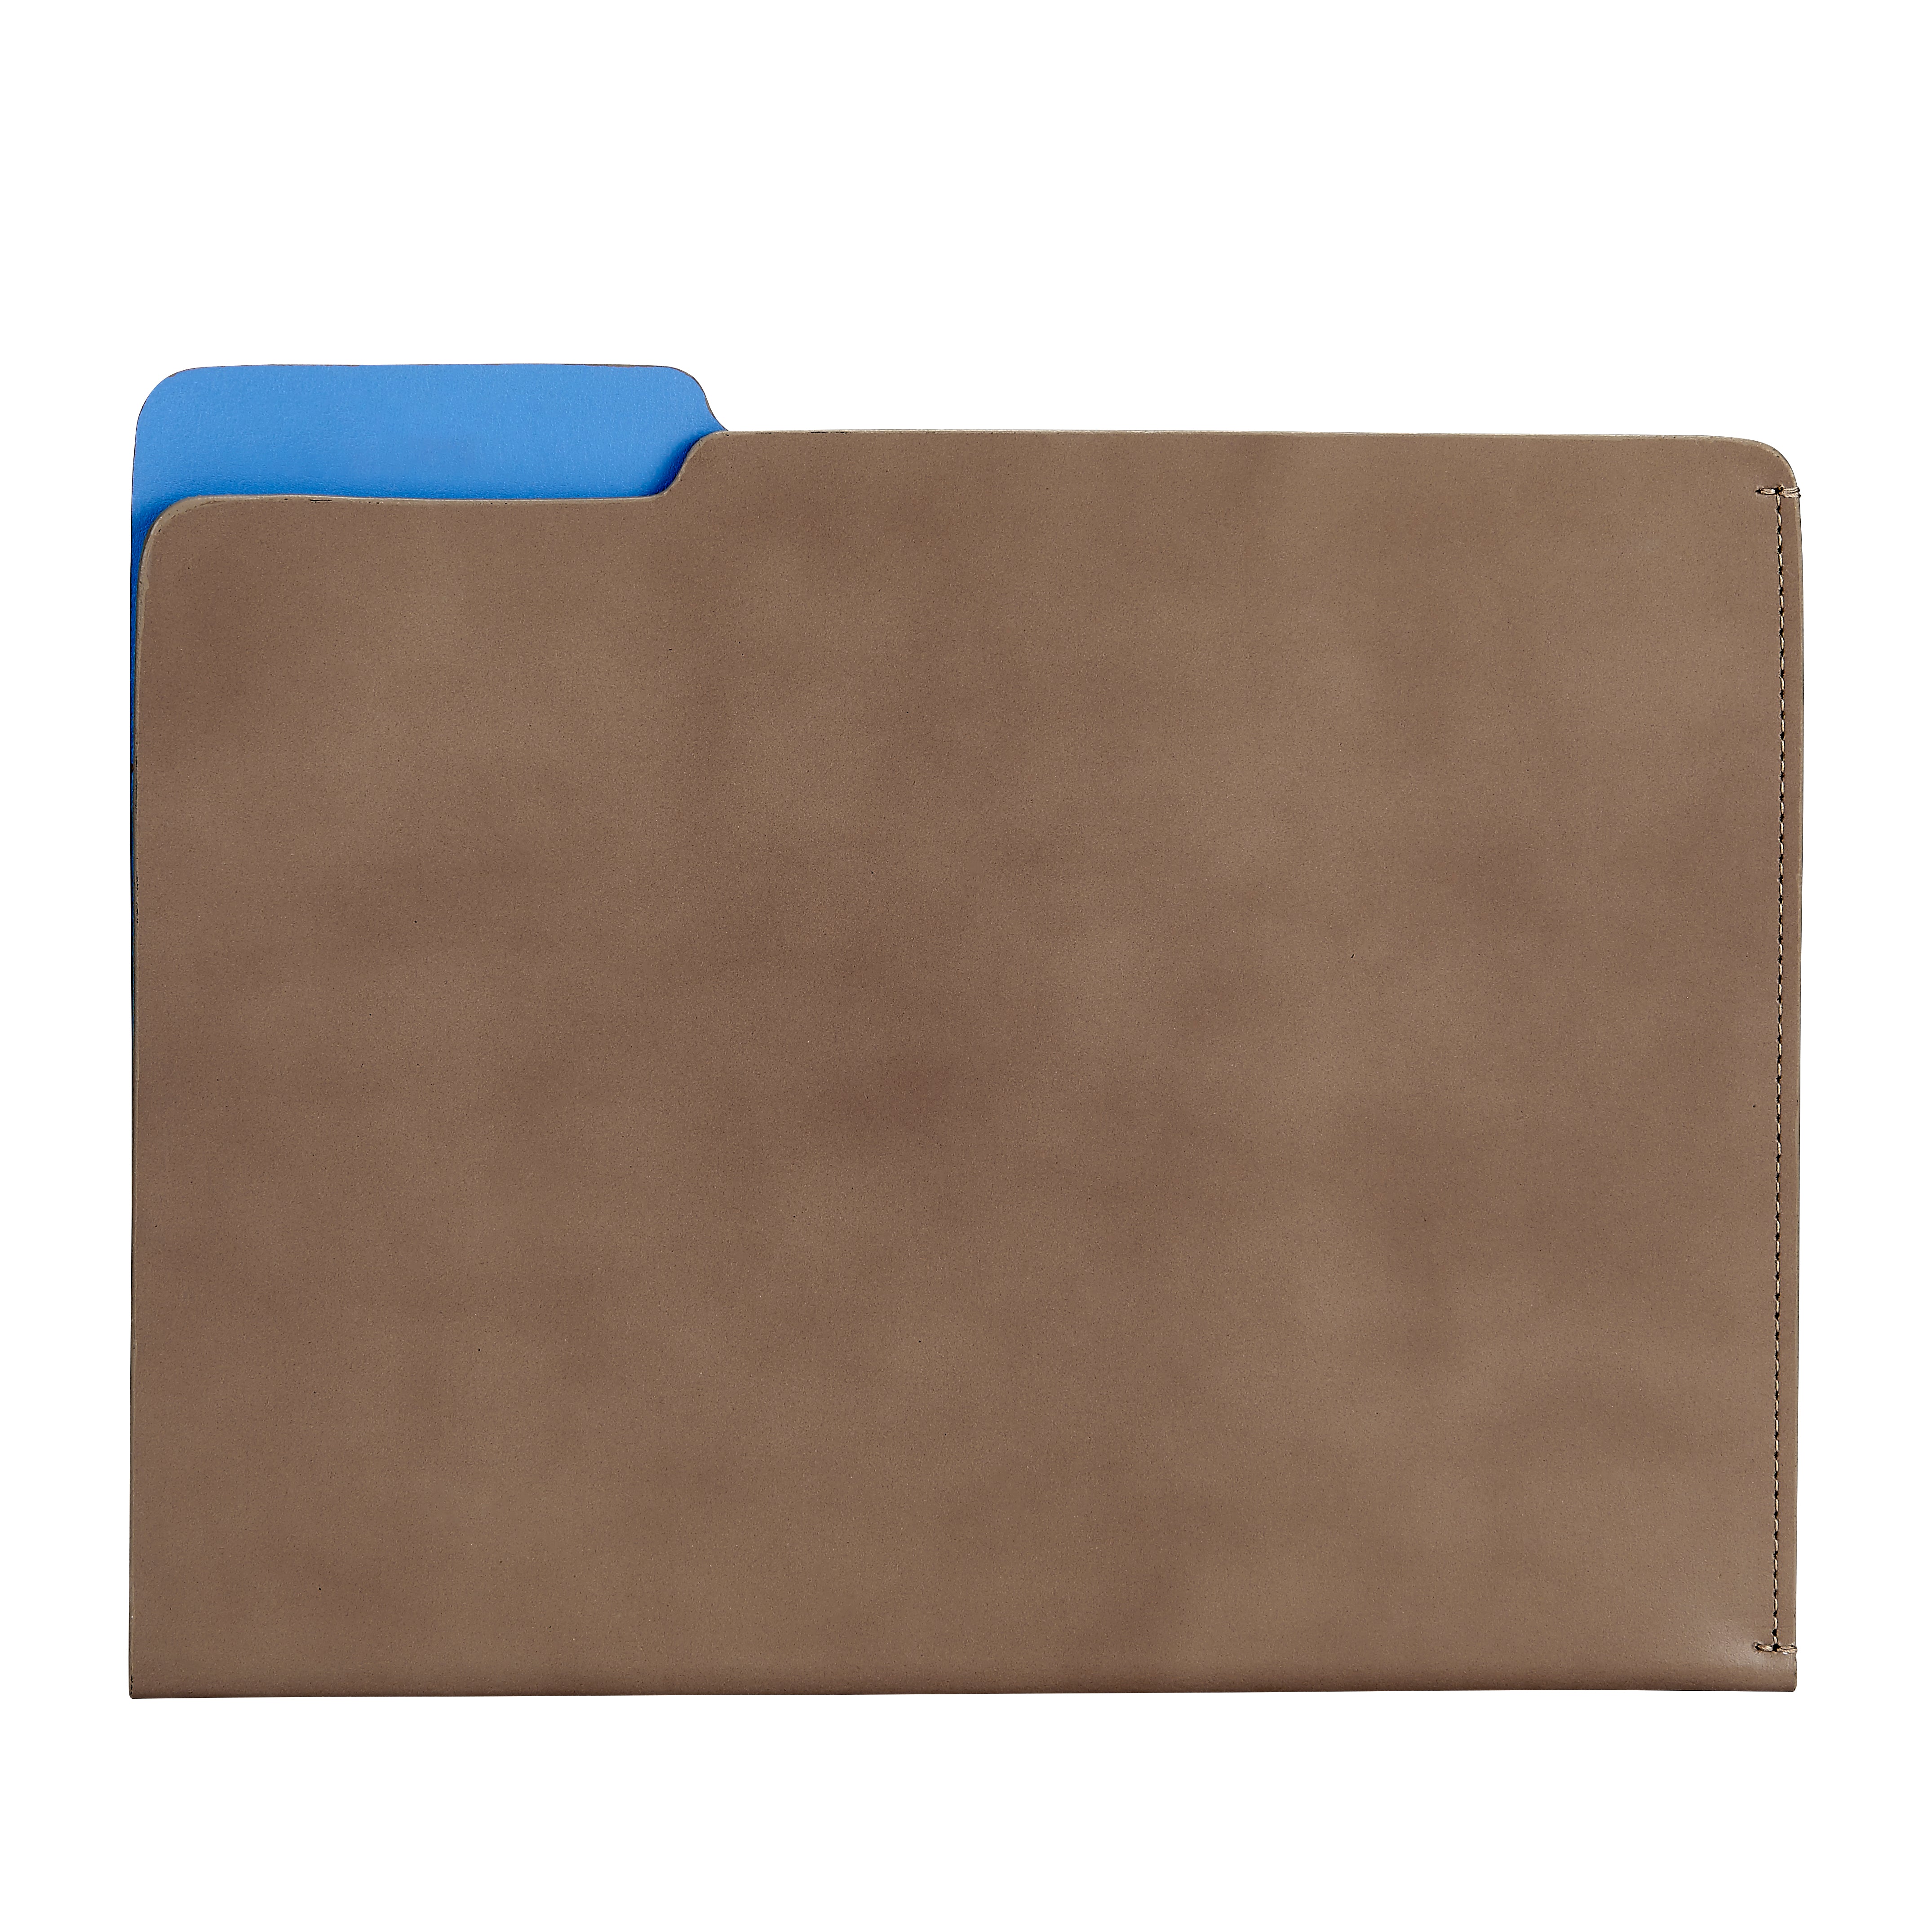 Graphic Image Carlo File Folder Taupe/Blue Leather